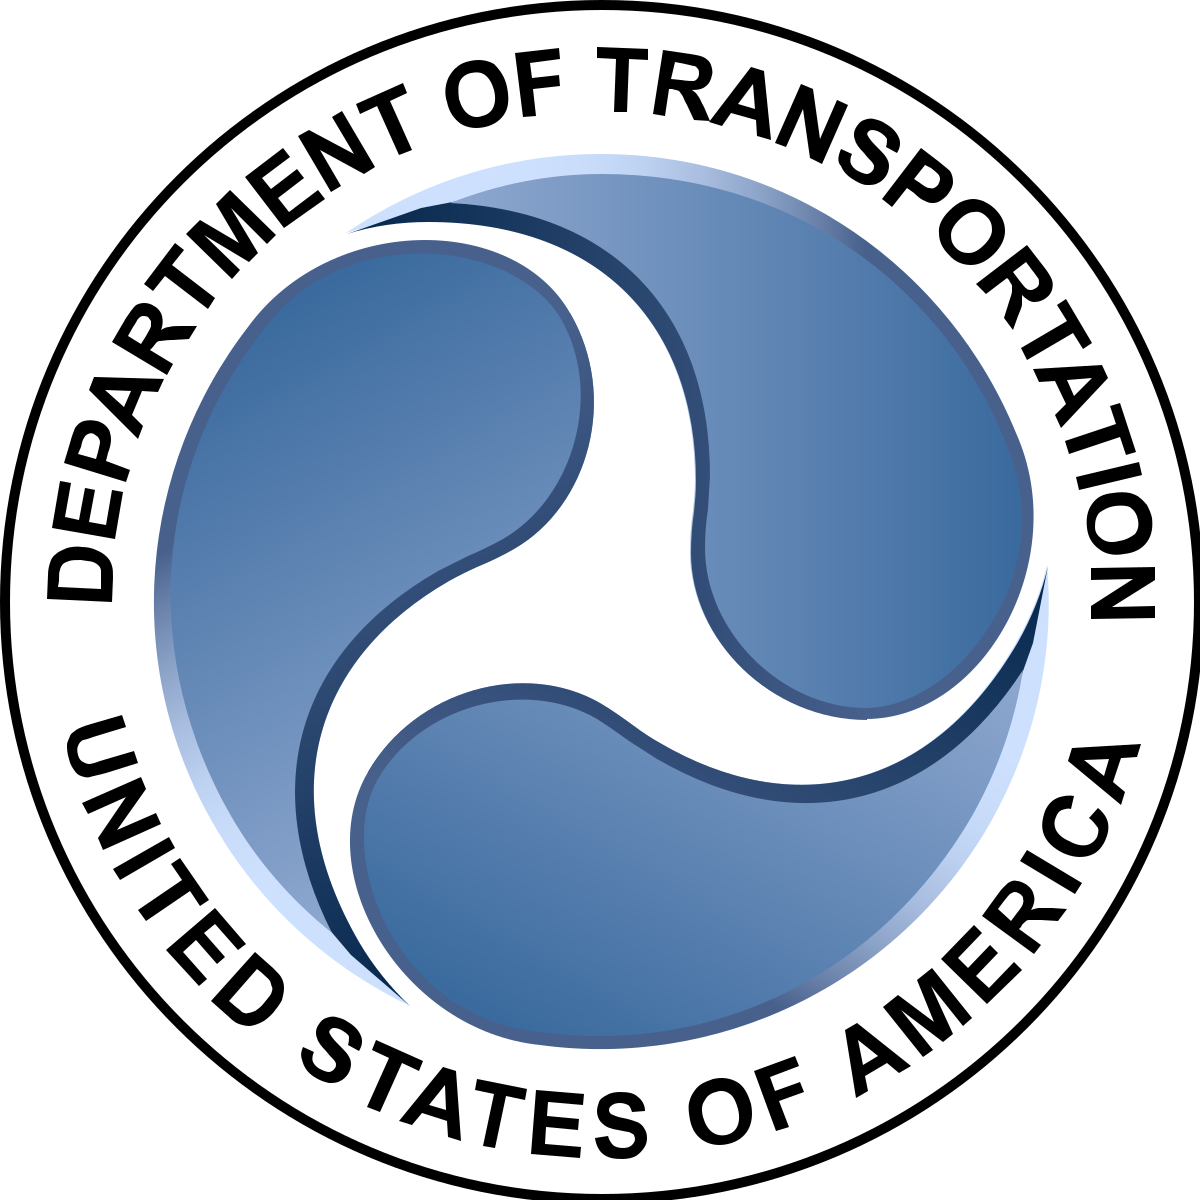 Bureau of Transportation Statistics logo